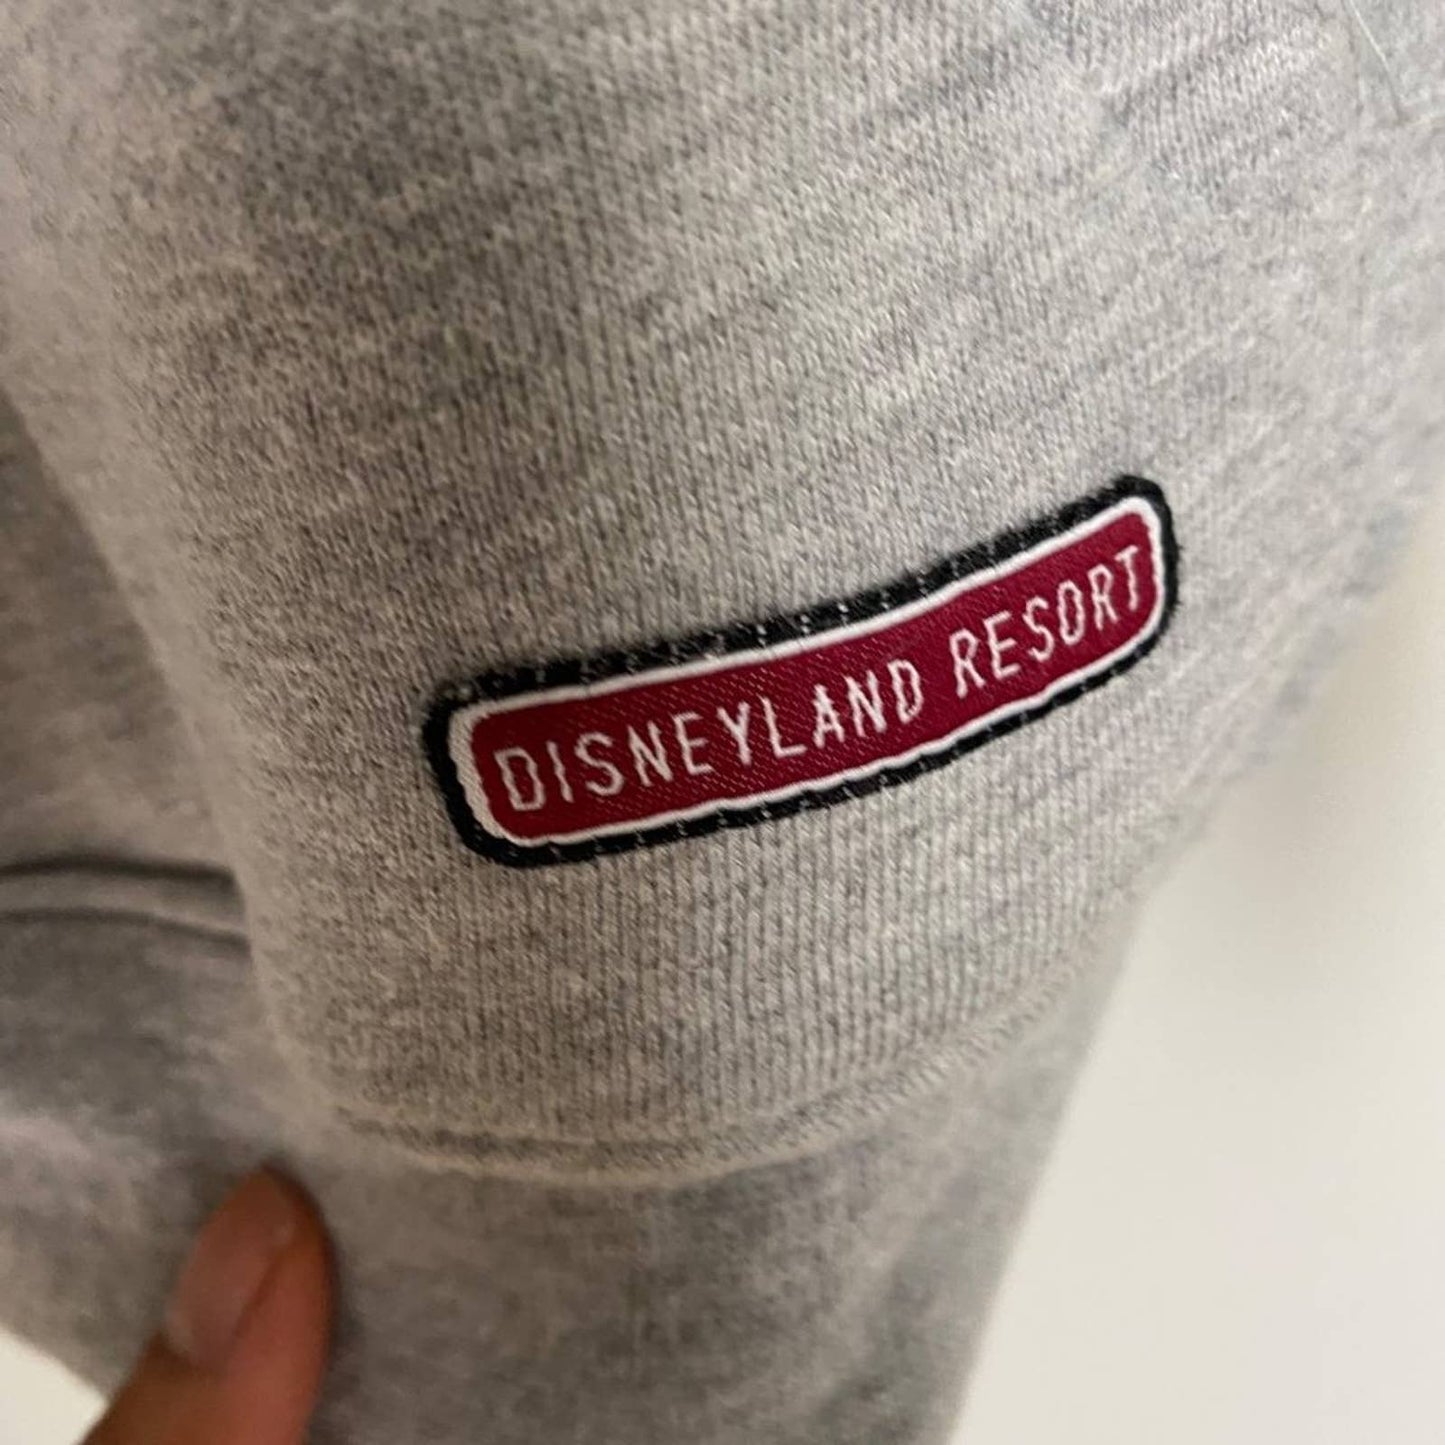 Disneyland sz S Disneyland Resort 1955 hoodie